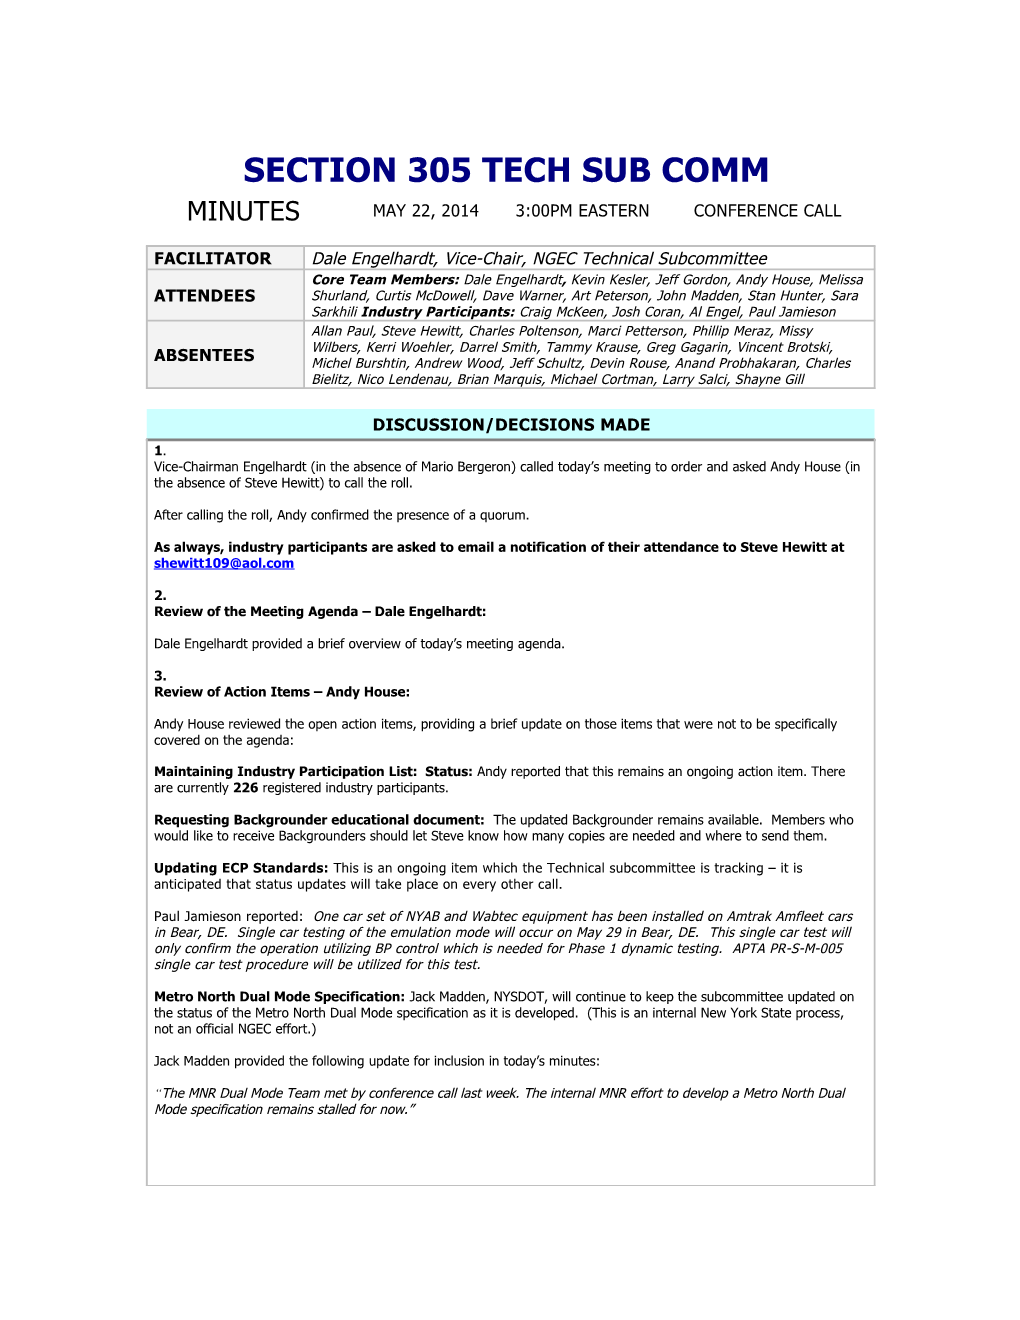 Section 305 Tech Sub Comm